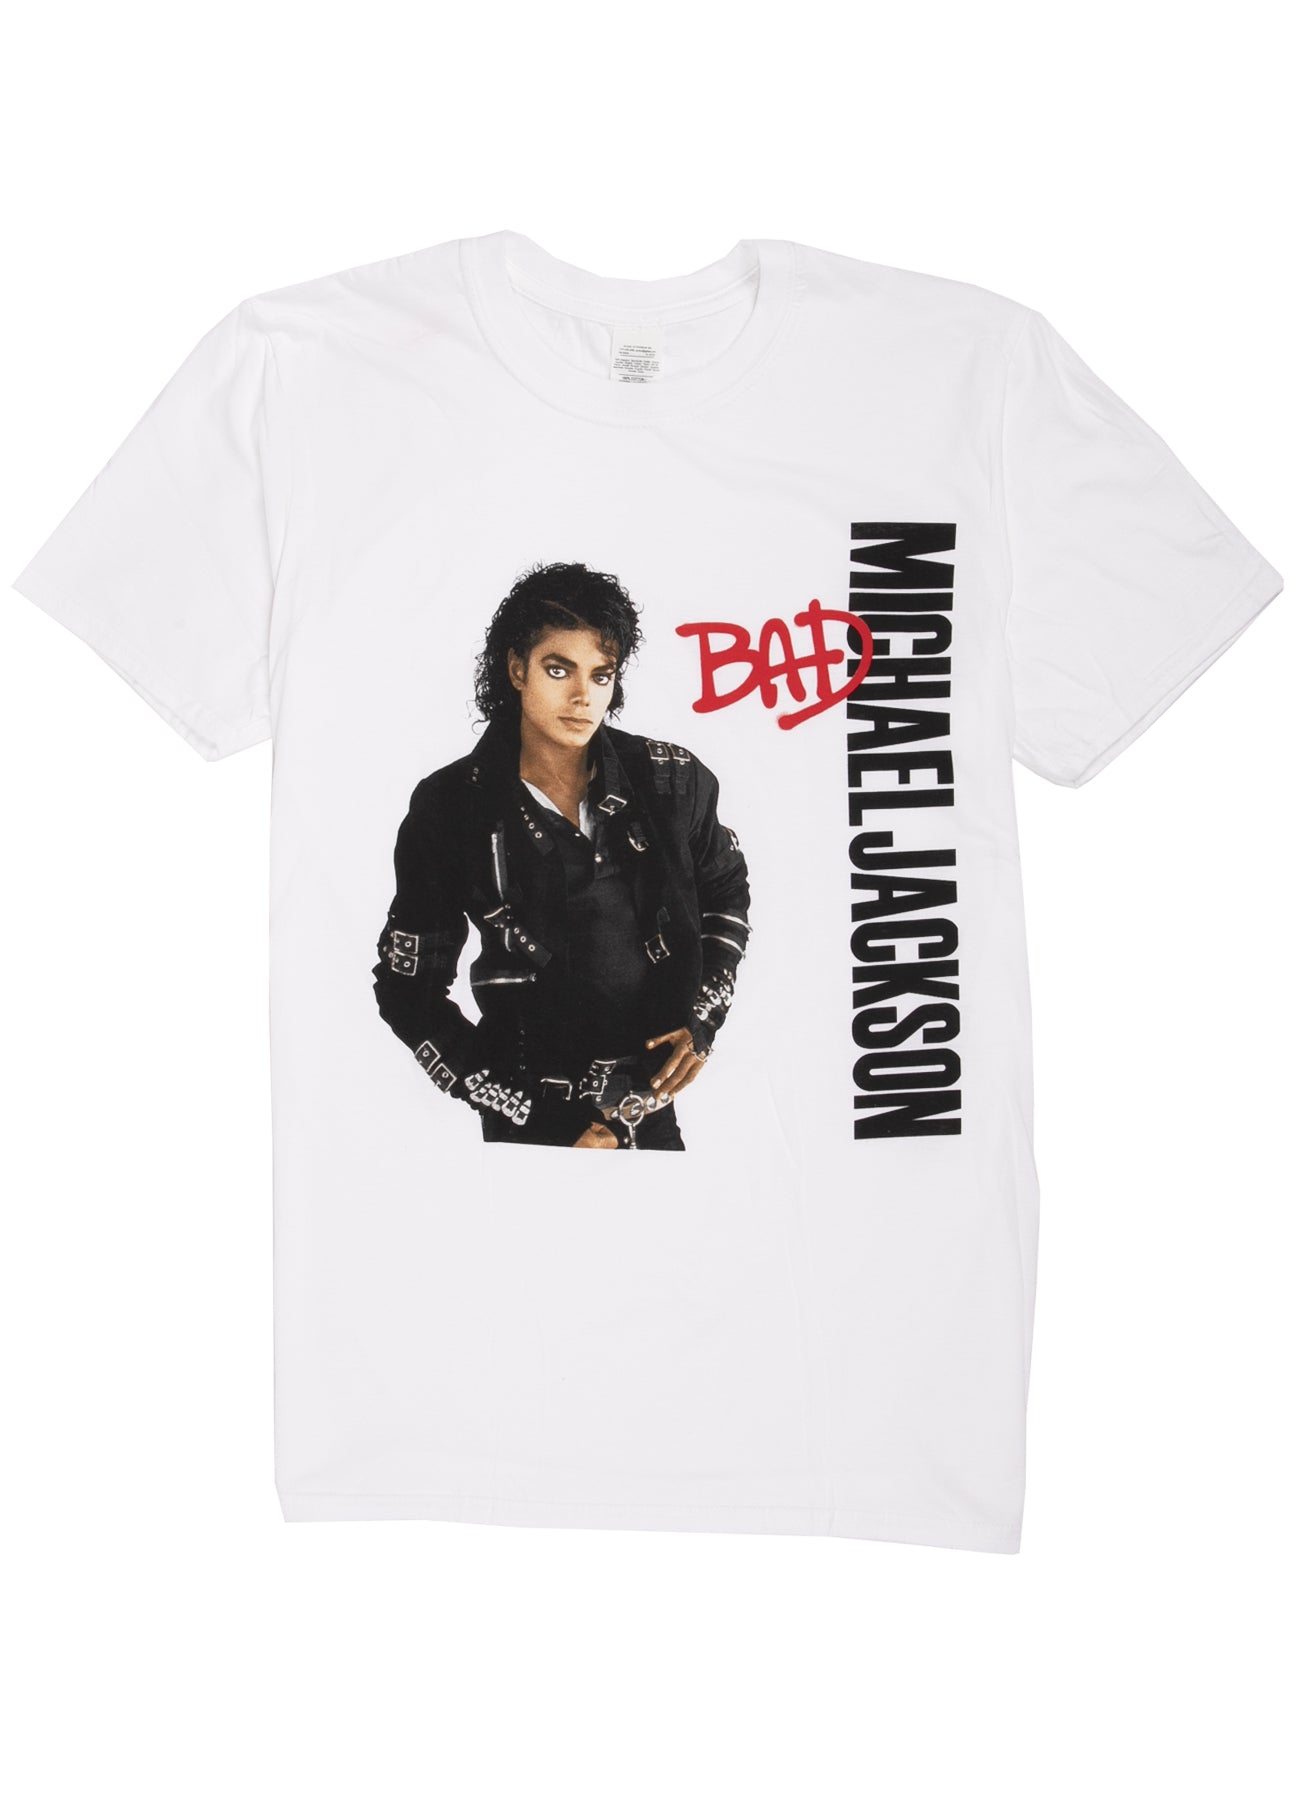 Michael Jackson “Billie Jean” graphic T Shirt | Global MJ Shop